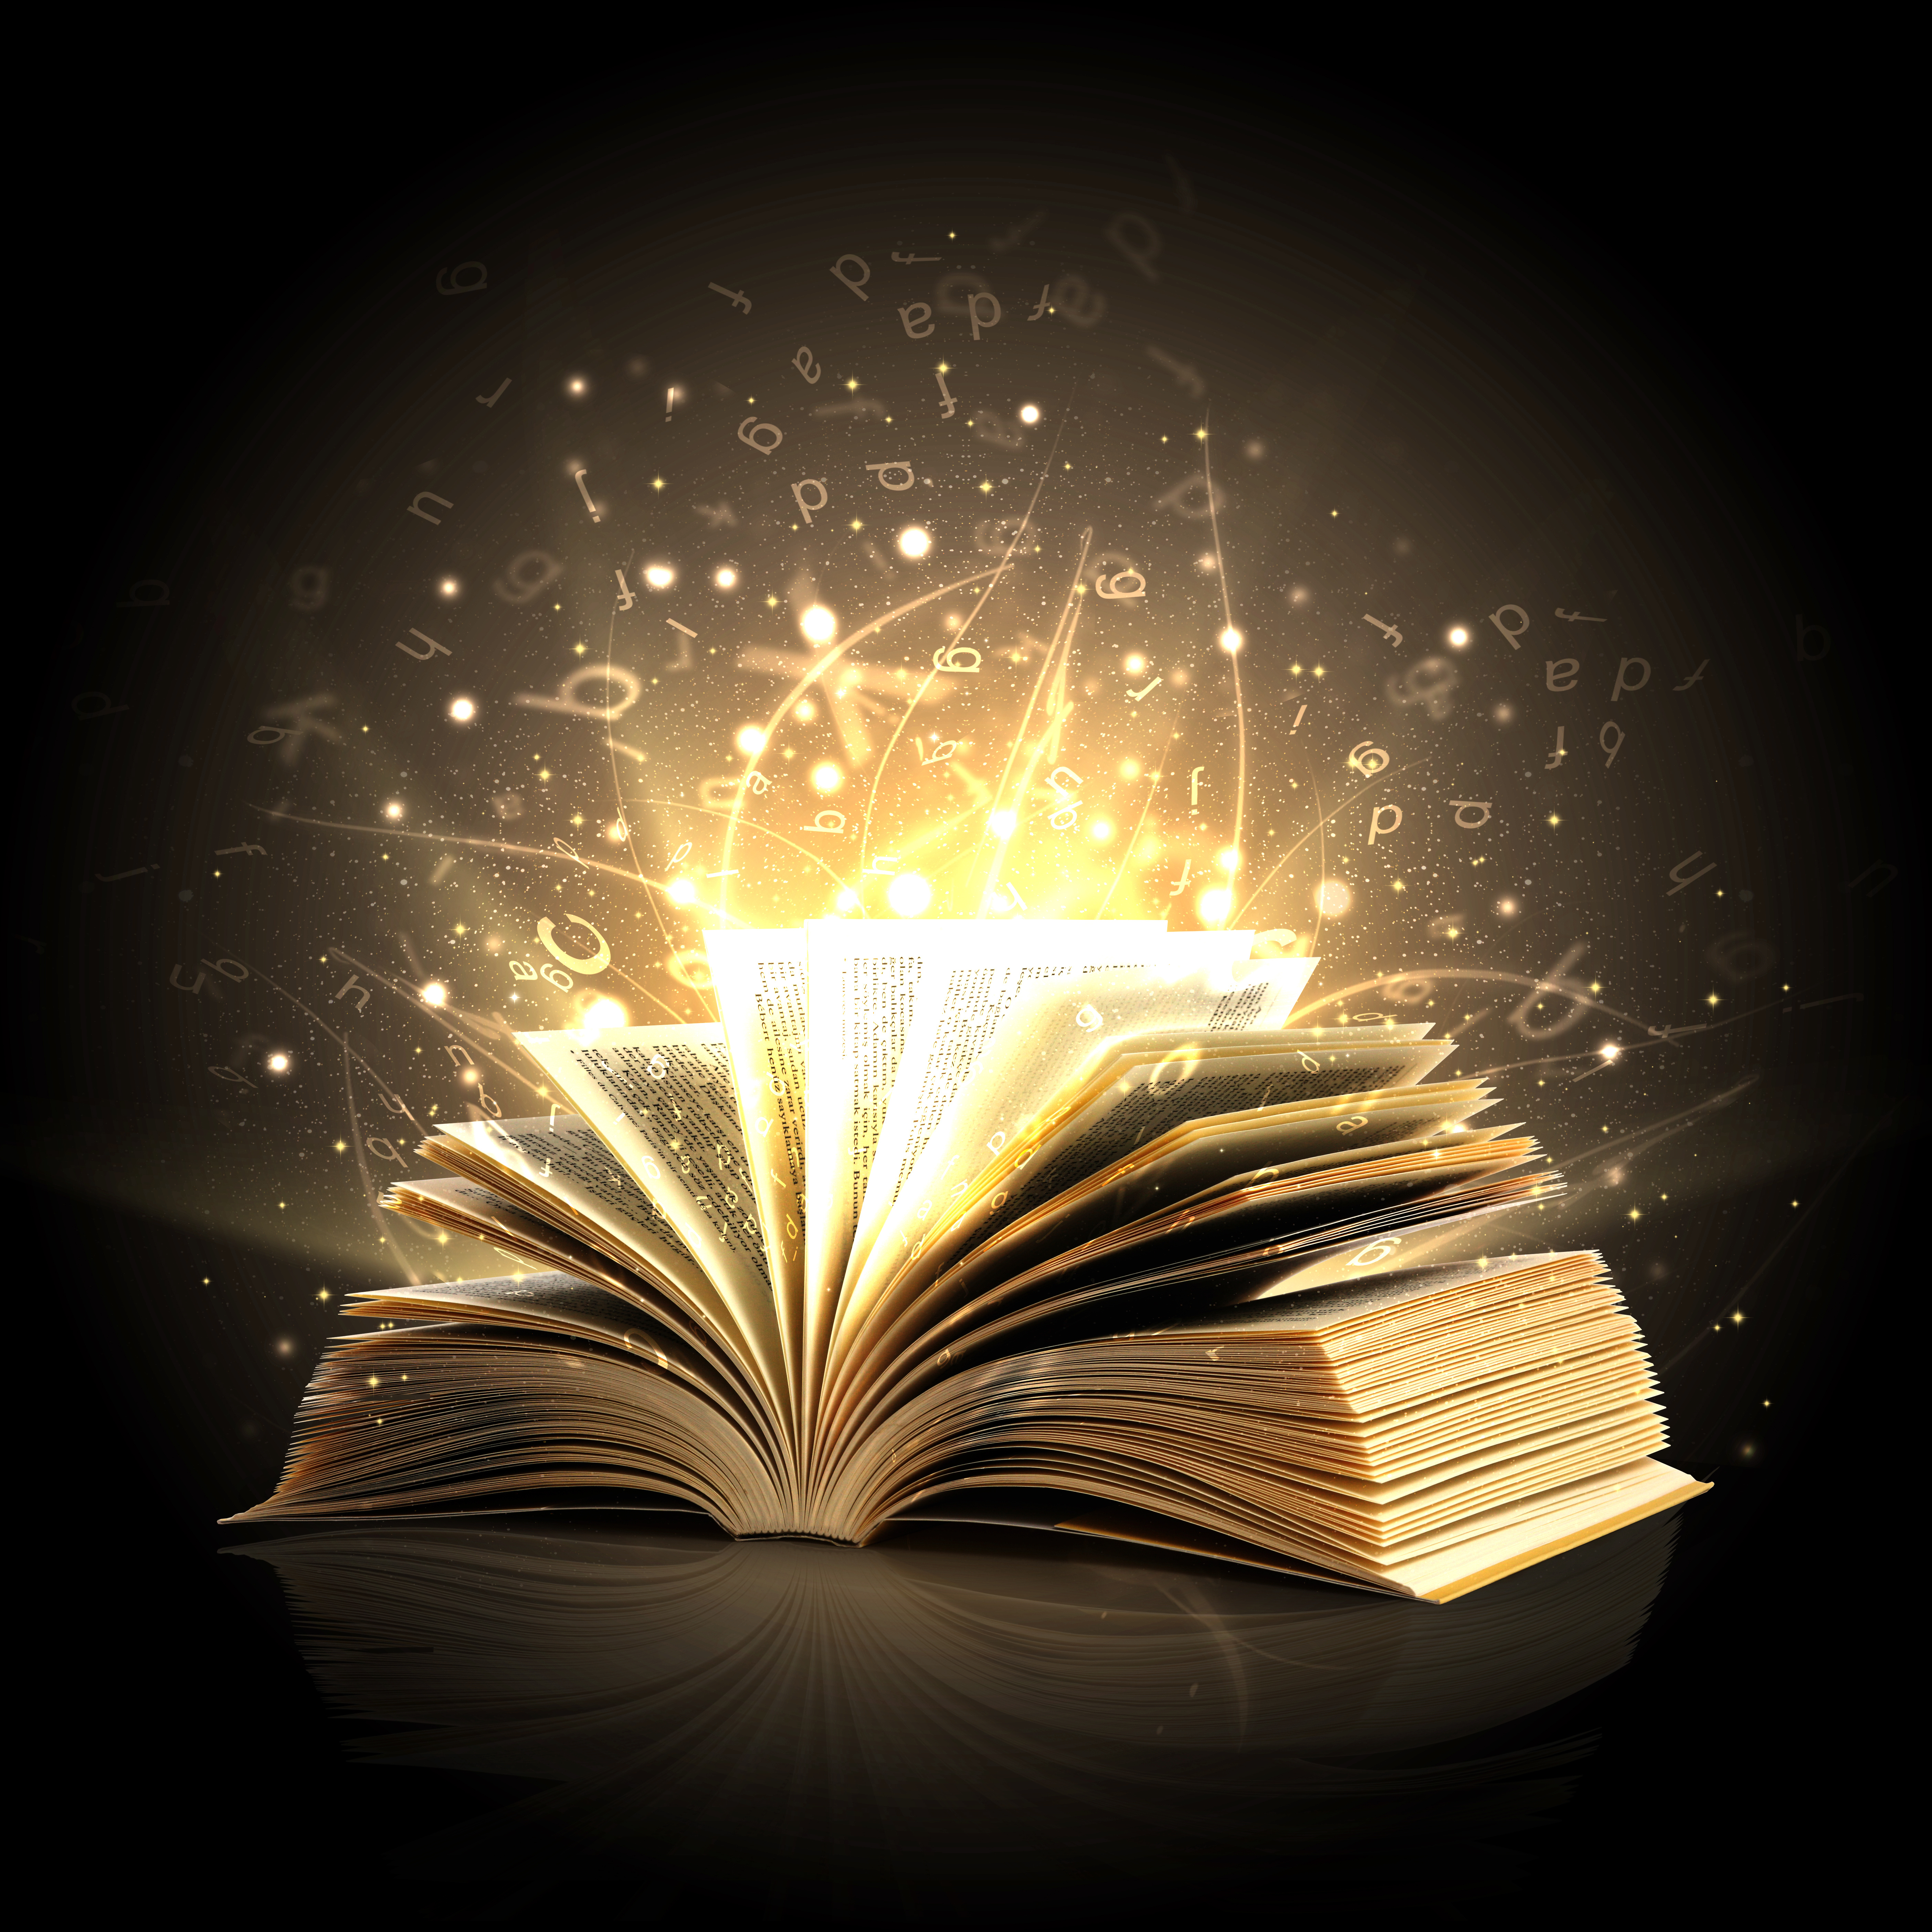 Magic book with magic lights